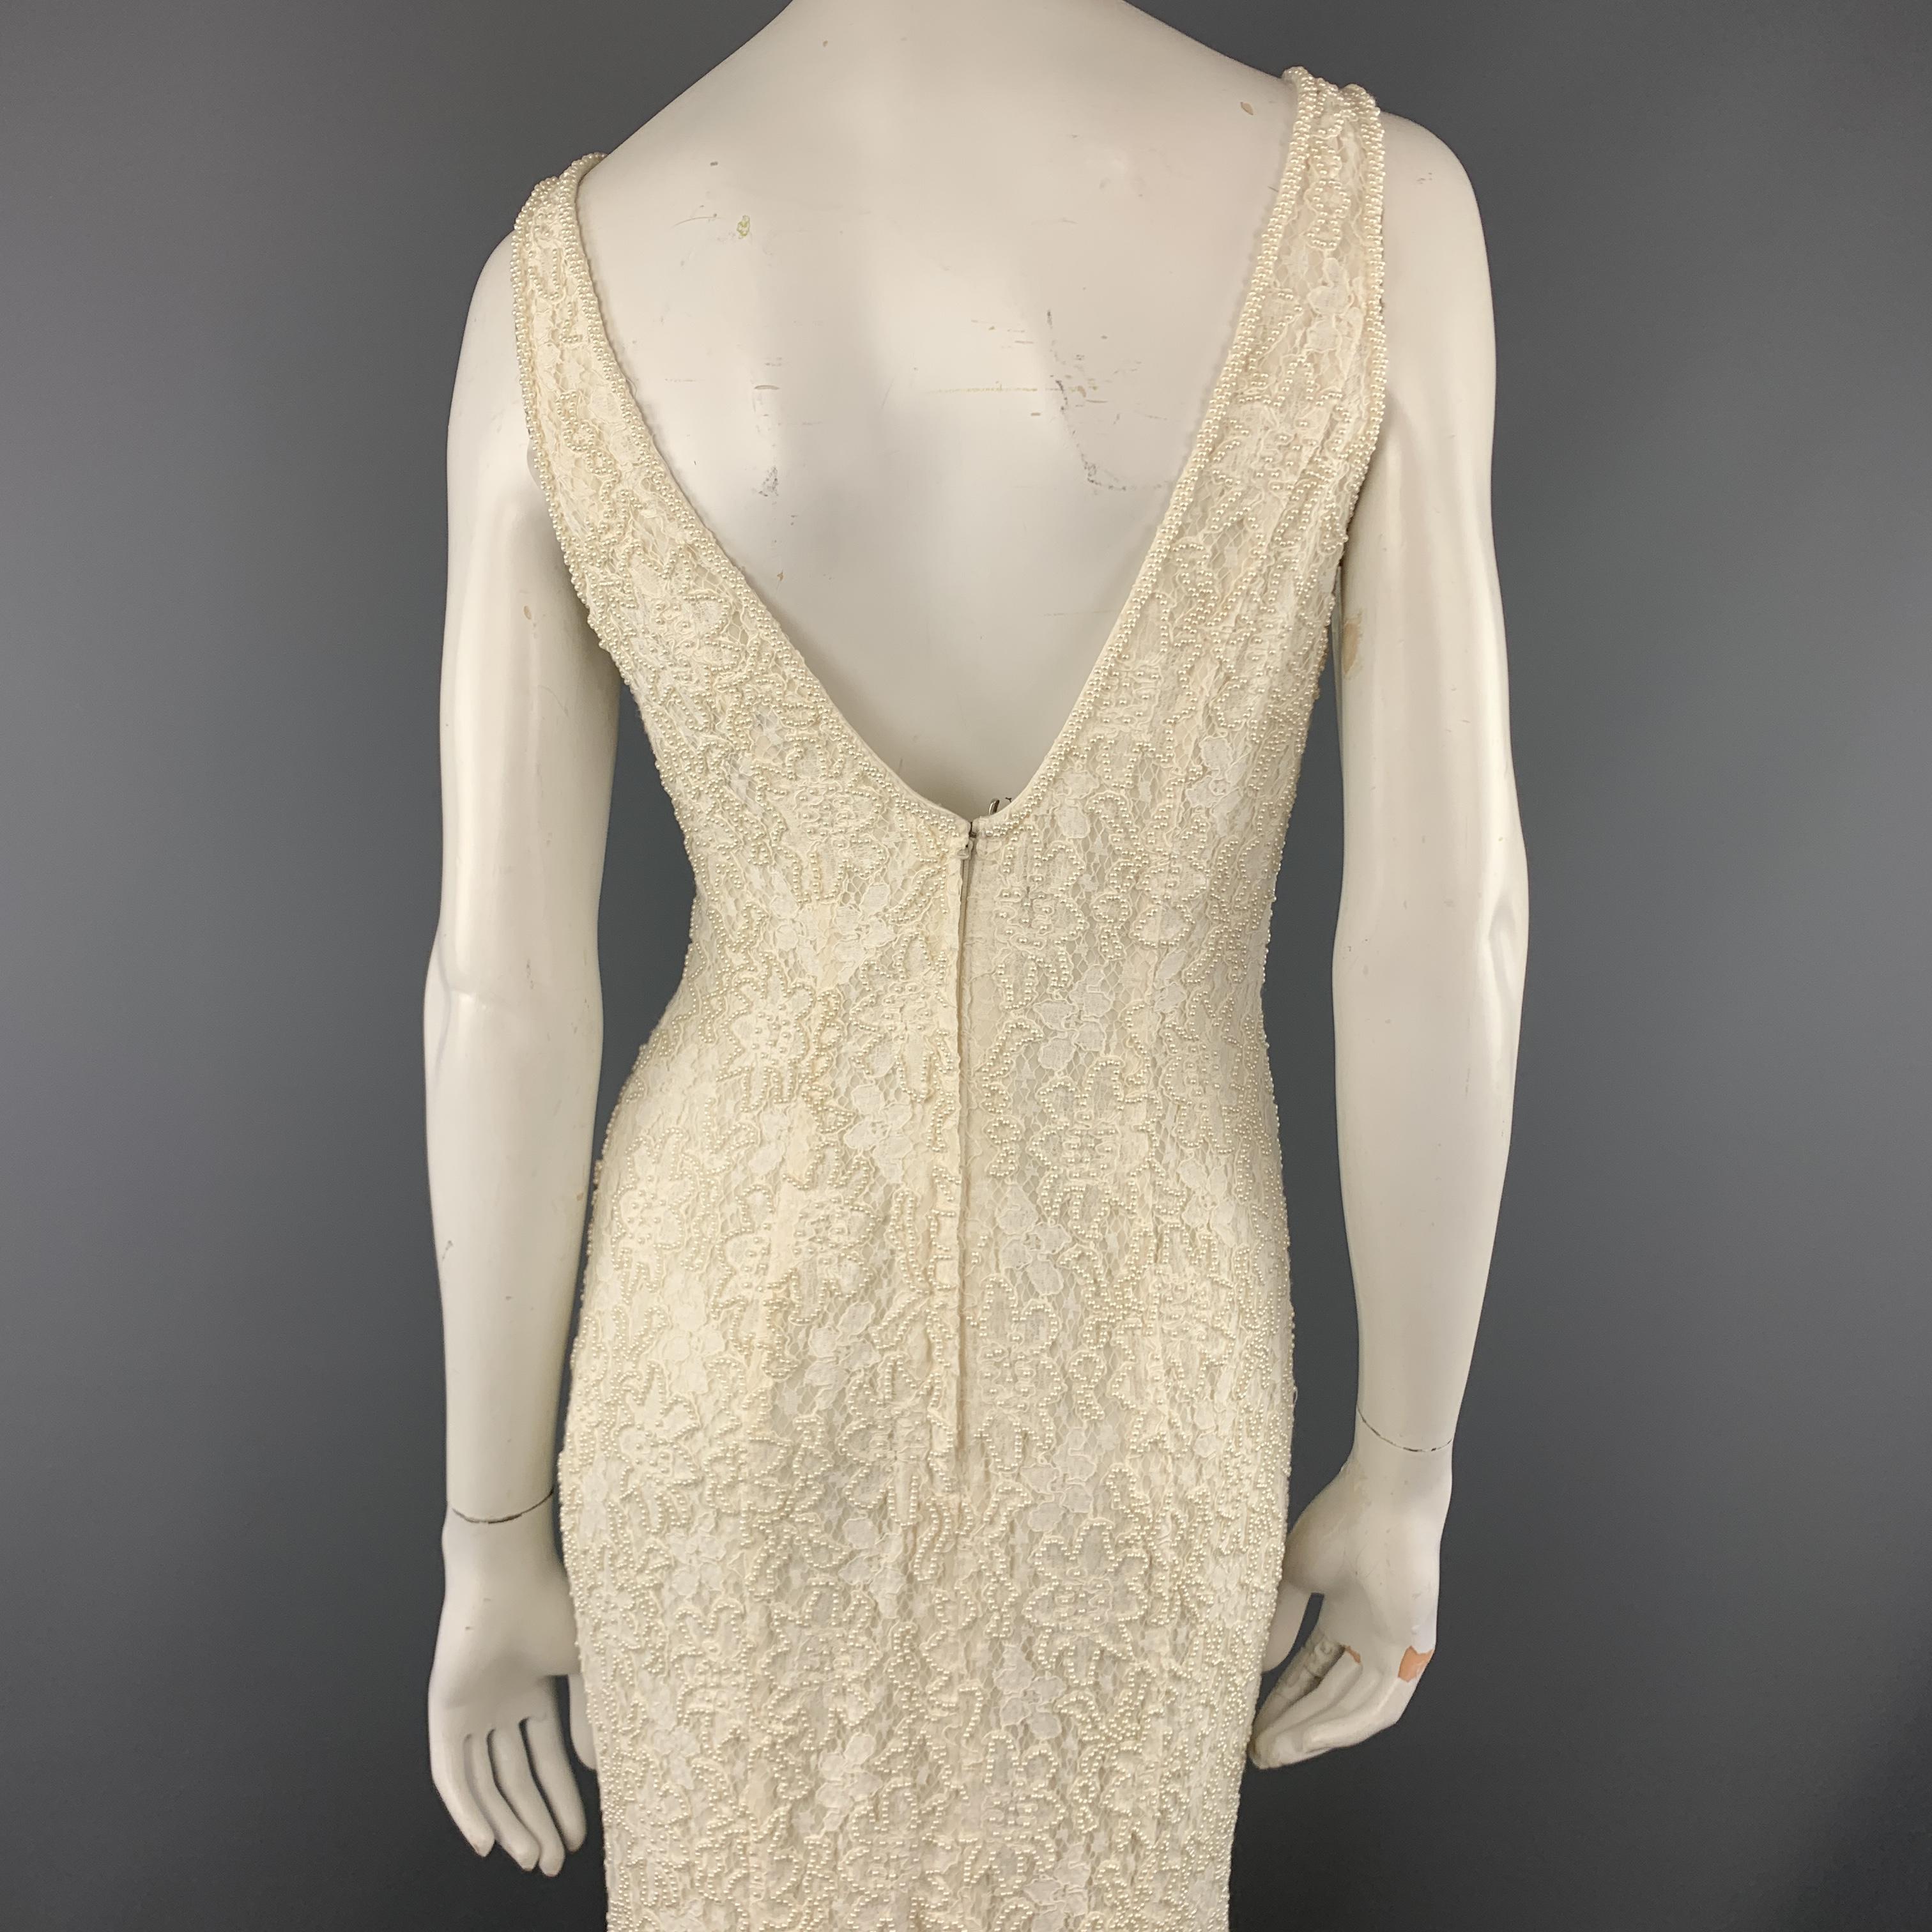 Beige CARMEN MARC VALVO Size 4 Cream Beaded Lace Overlay Sleeveless Gown